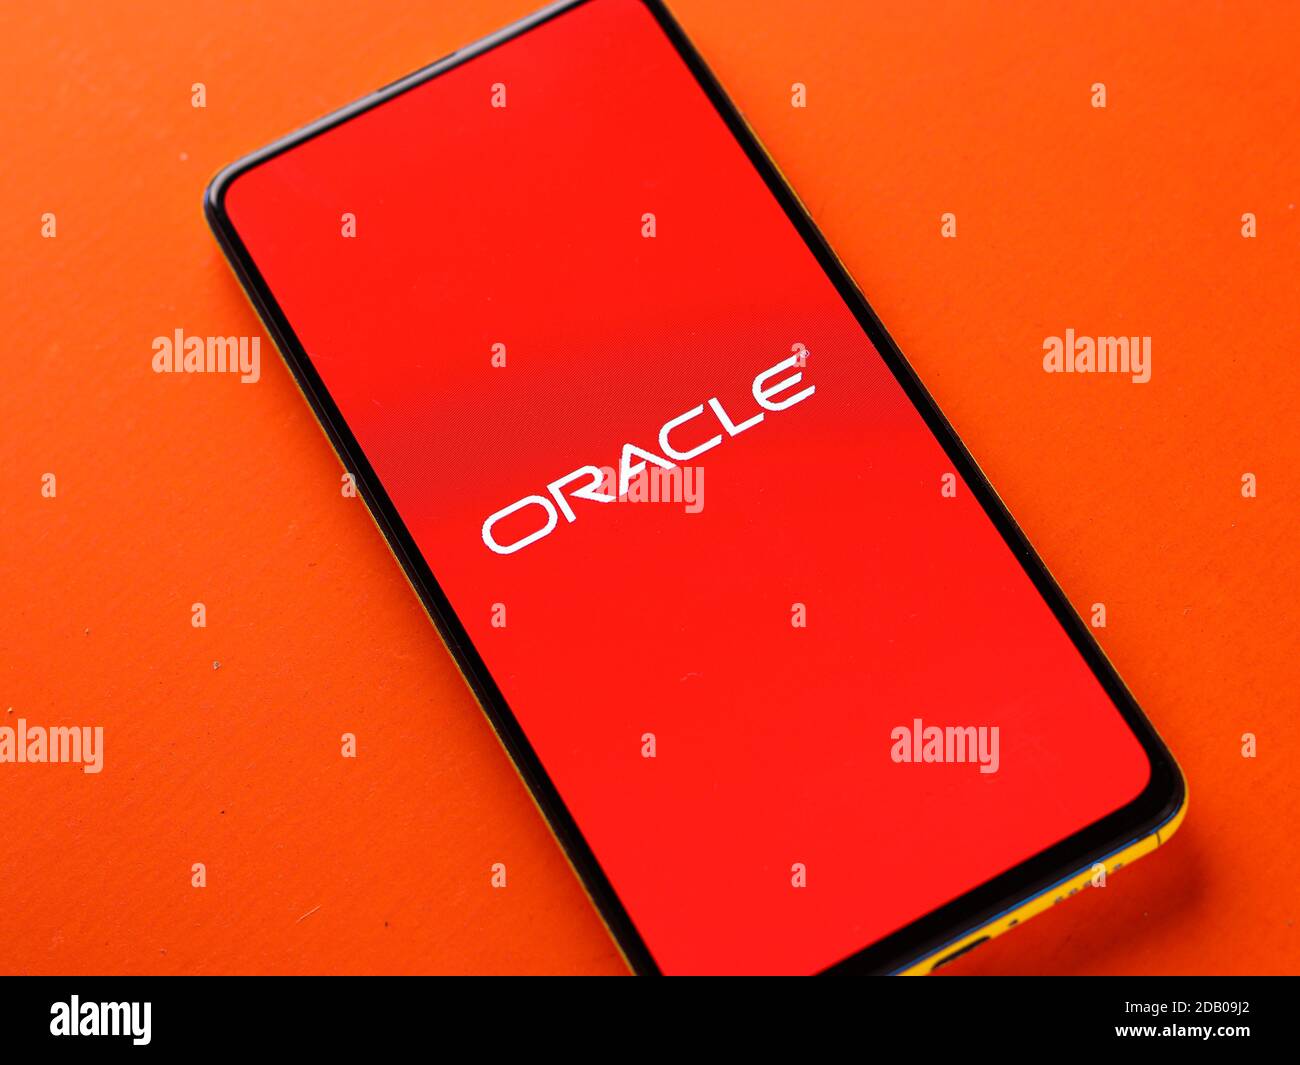 Assam, india - November 15, 2020 : Oracle logo on phone screen stock image. Stock Photo